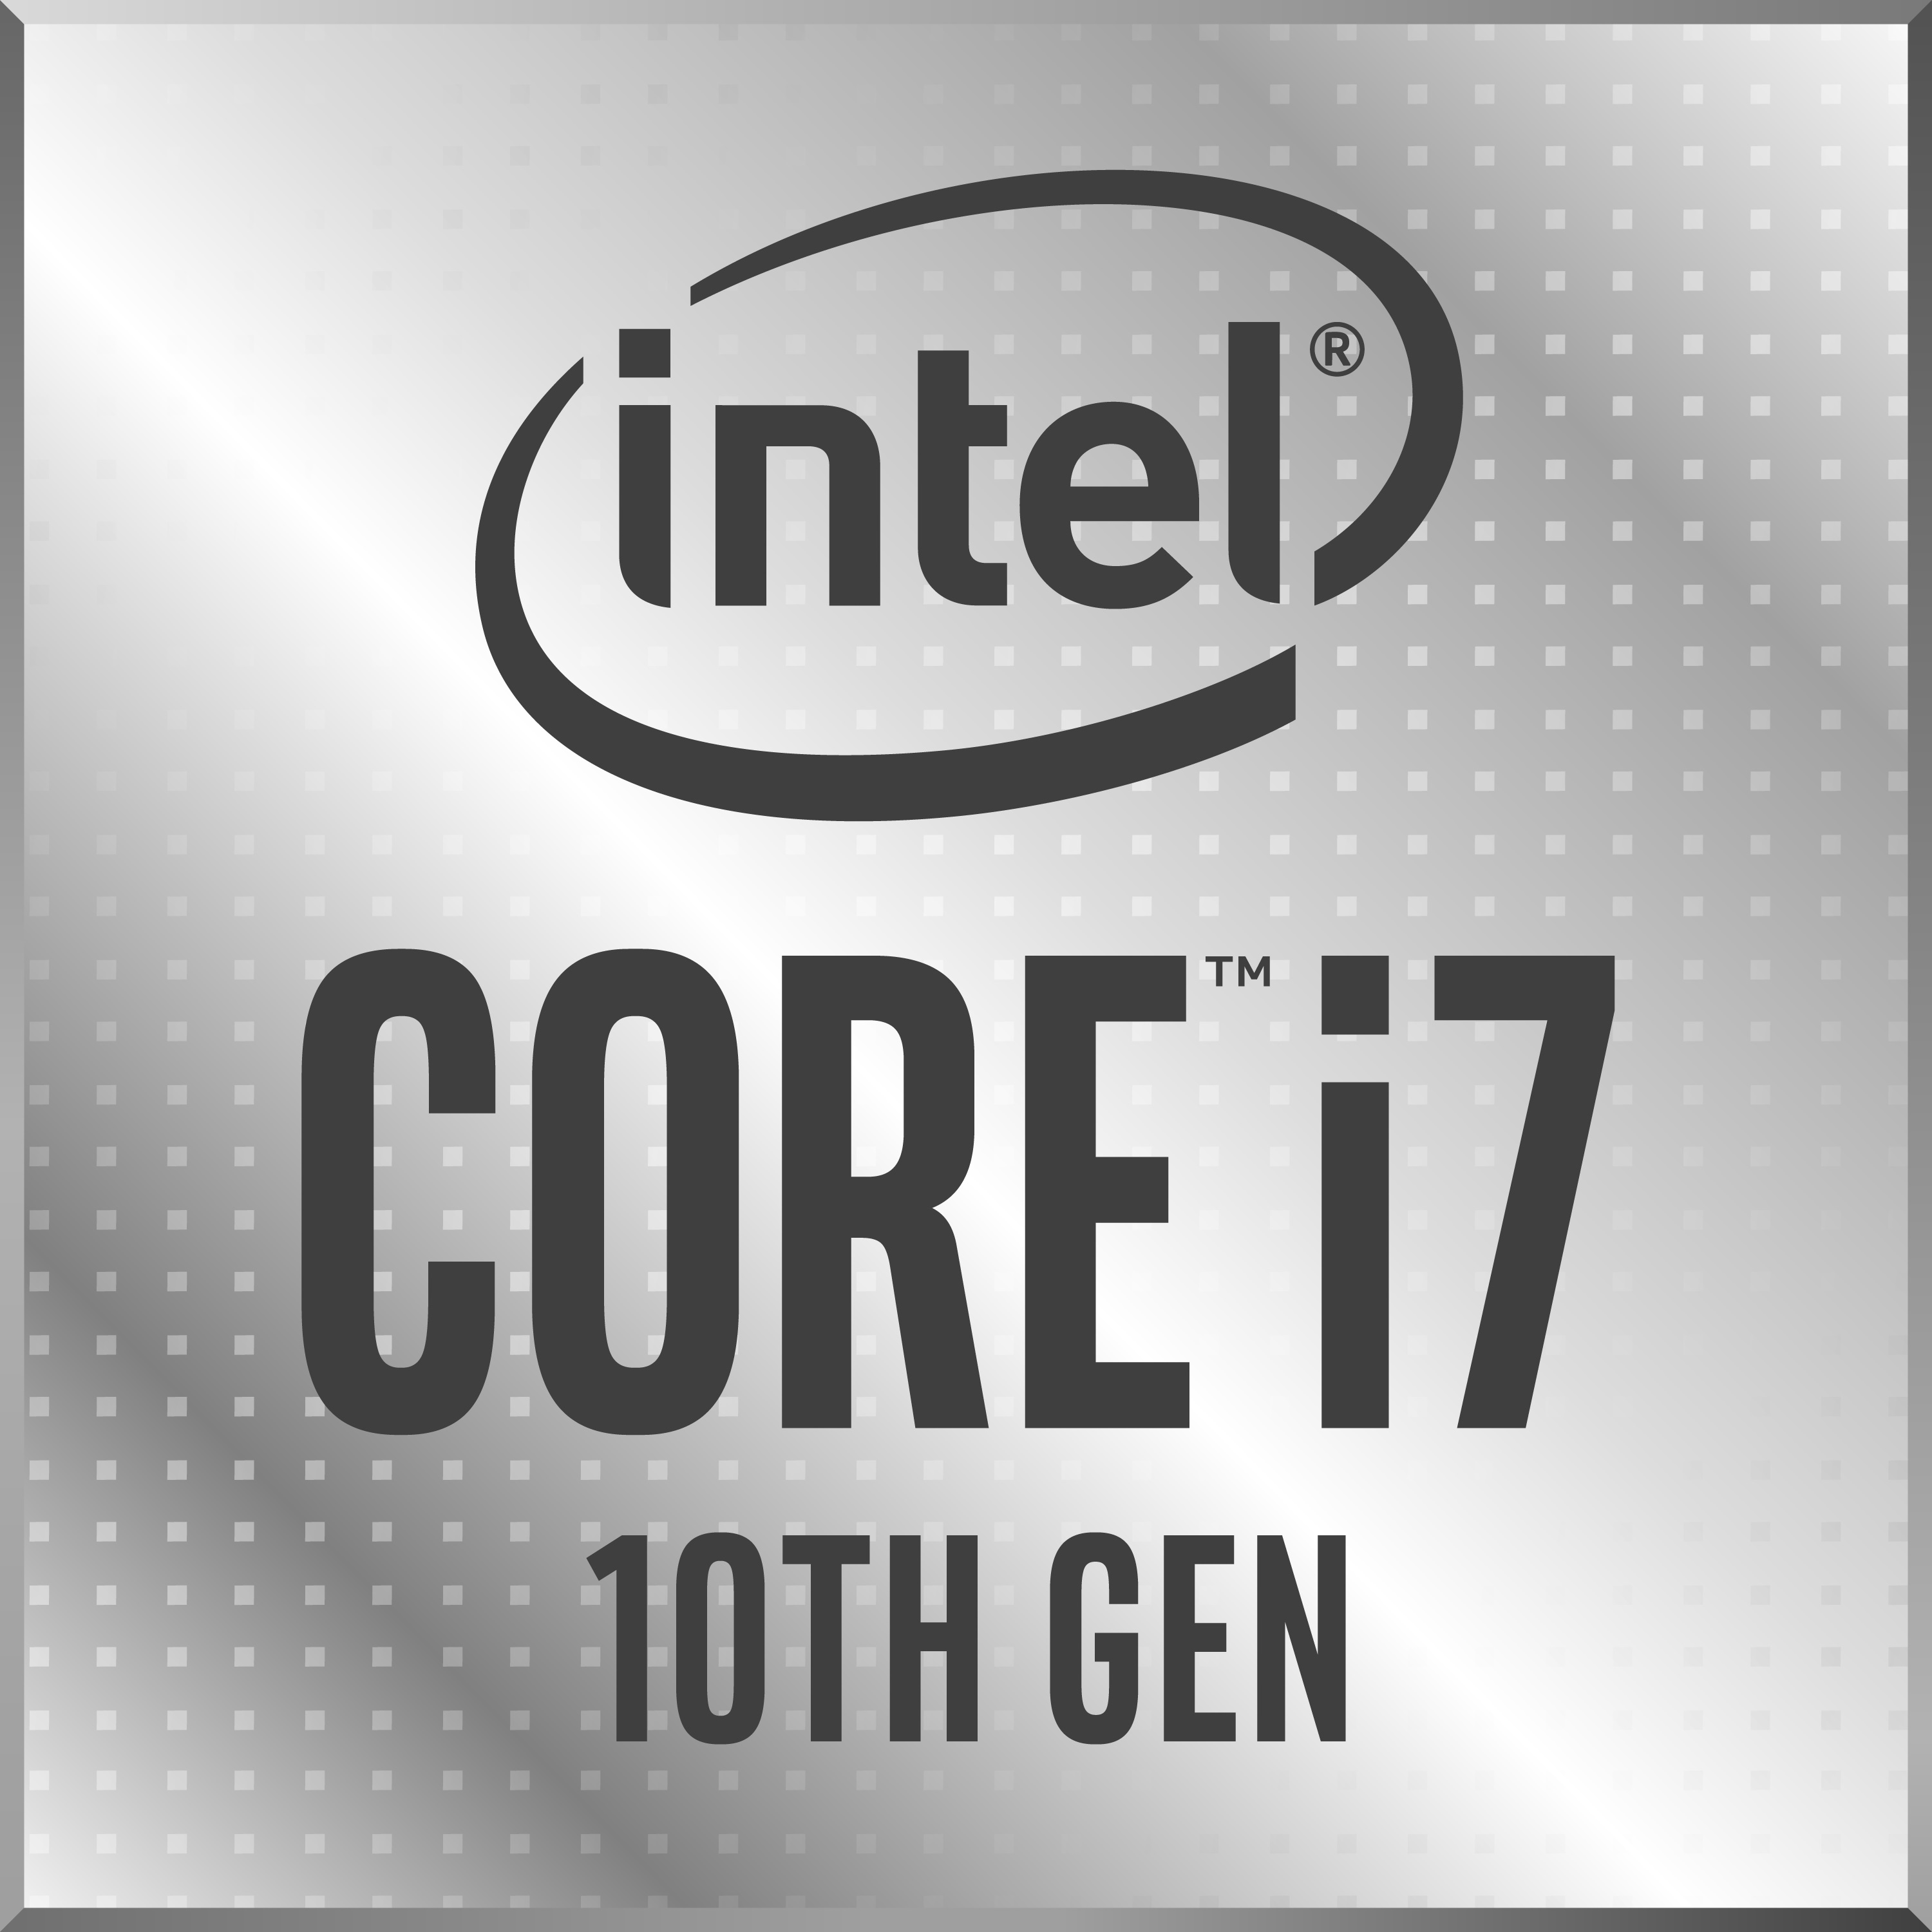 Intel Core i7-10750H Processor Benchmarks - NotebookCheck.net